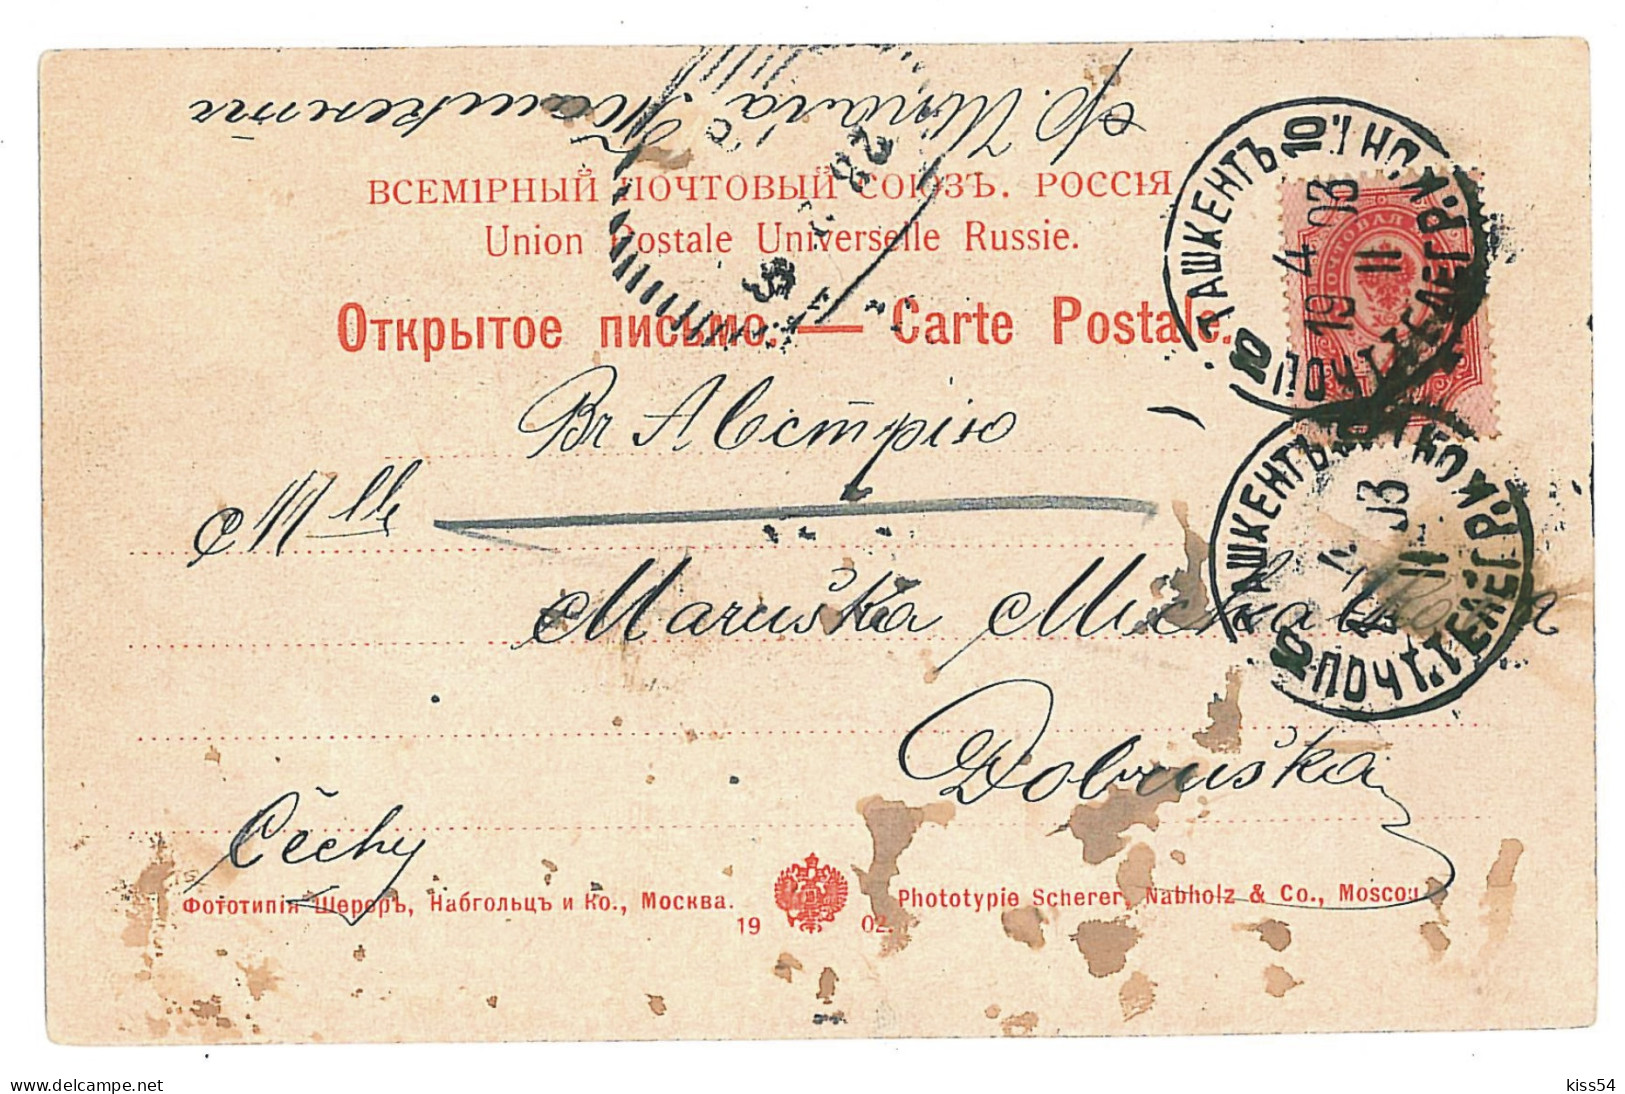 U 11 - 9828 TASHKENT, Uzbekistan, Church - Old Postcard - Used - 1903 - Uzbekistan